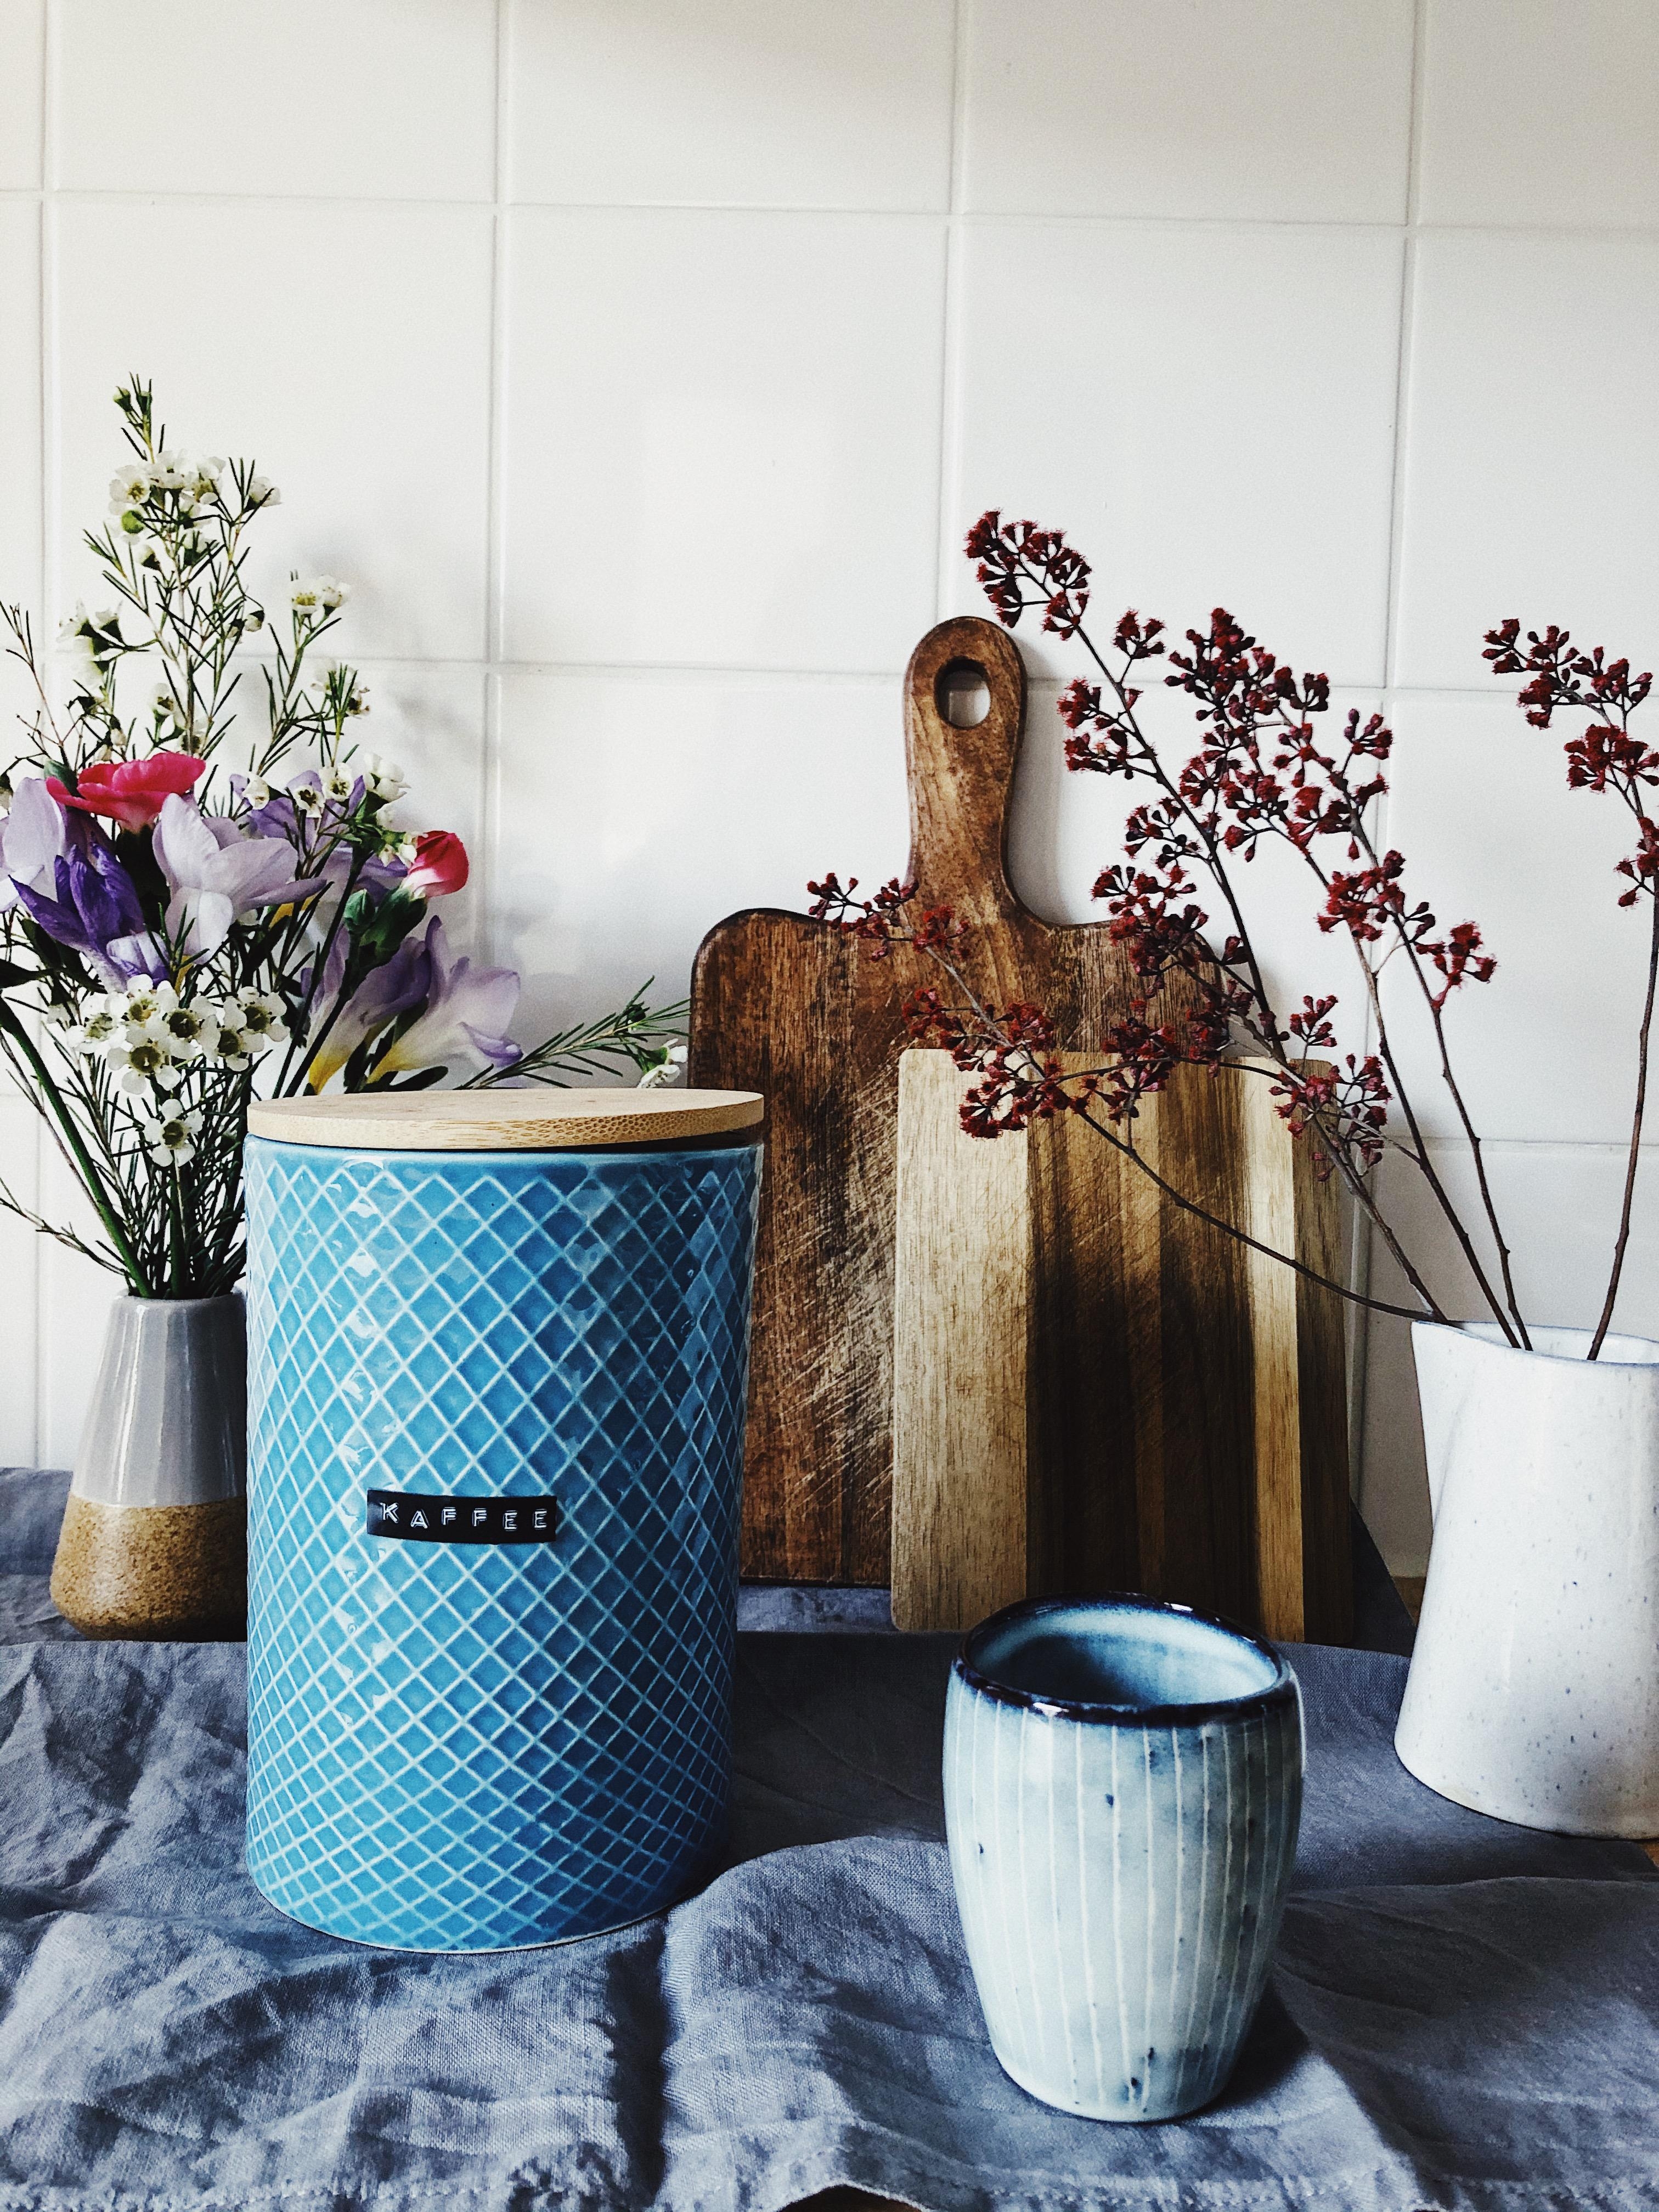 NATURAL
#Holzbretter #Küche #Blumen #Keramik